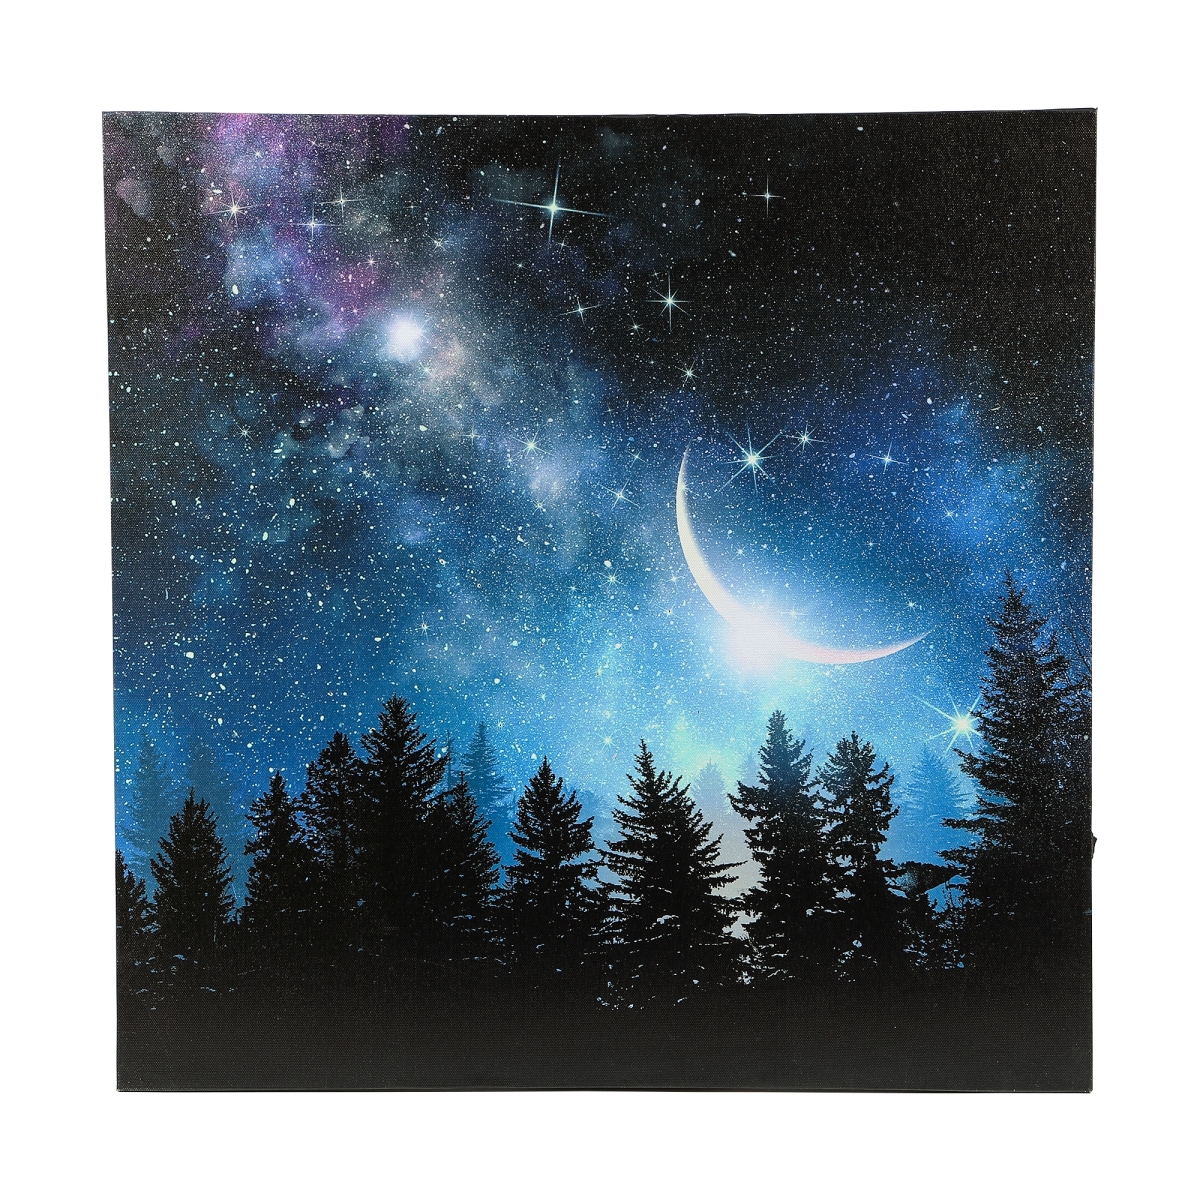 Wha662 Moon & Night Sky Canvas Print Wall Art With Led Lights